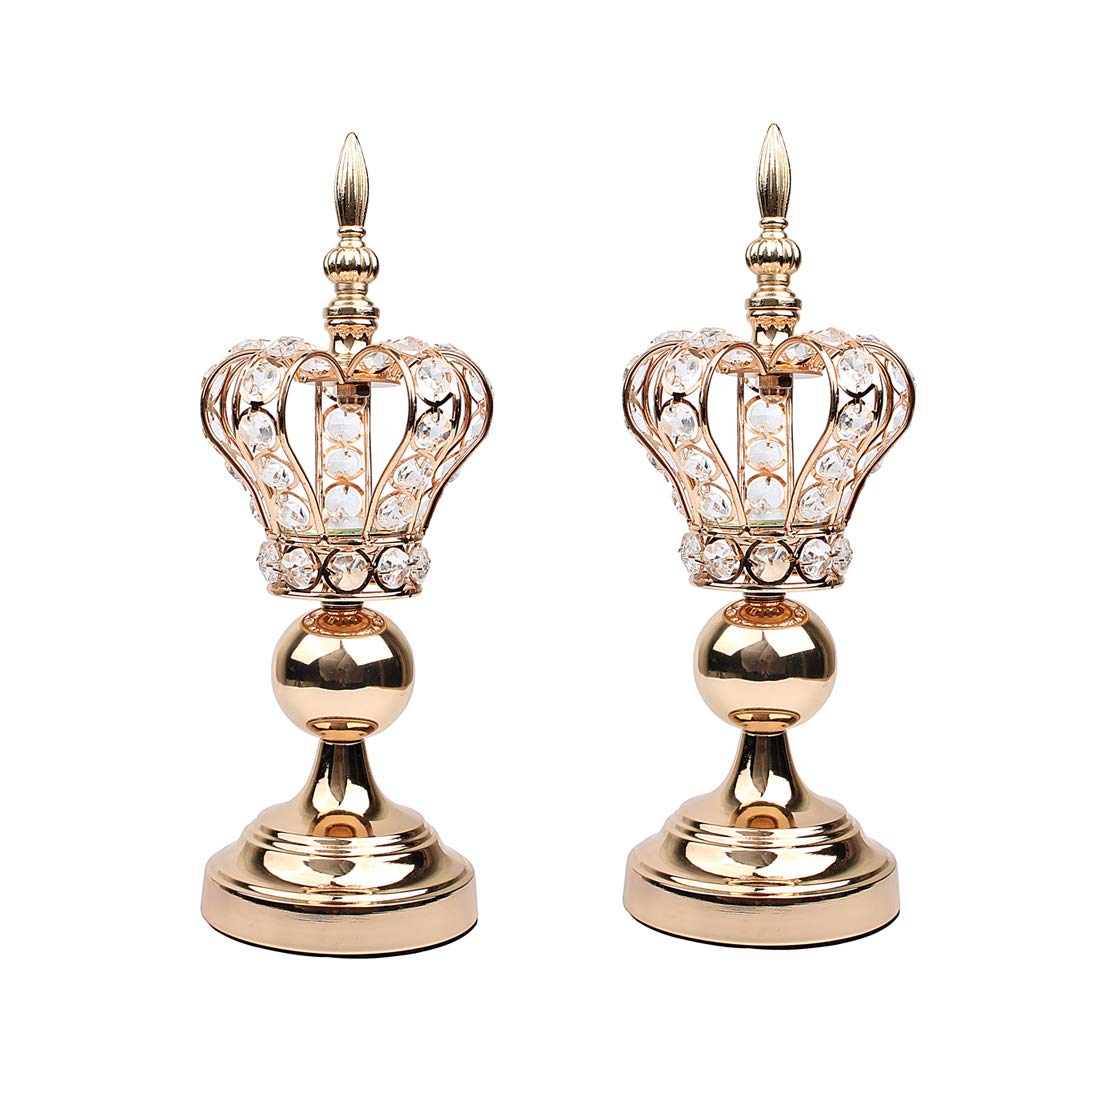 Hophen Golden Crown Metal Crystal Beads Candle Tea Light Holder Elegant Wedding Dining Coffee Table Decorative Centerpiece Anniversary Celebration ...